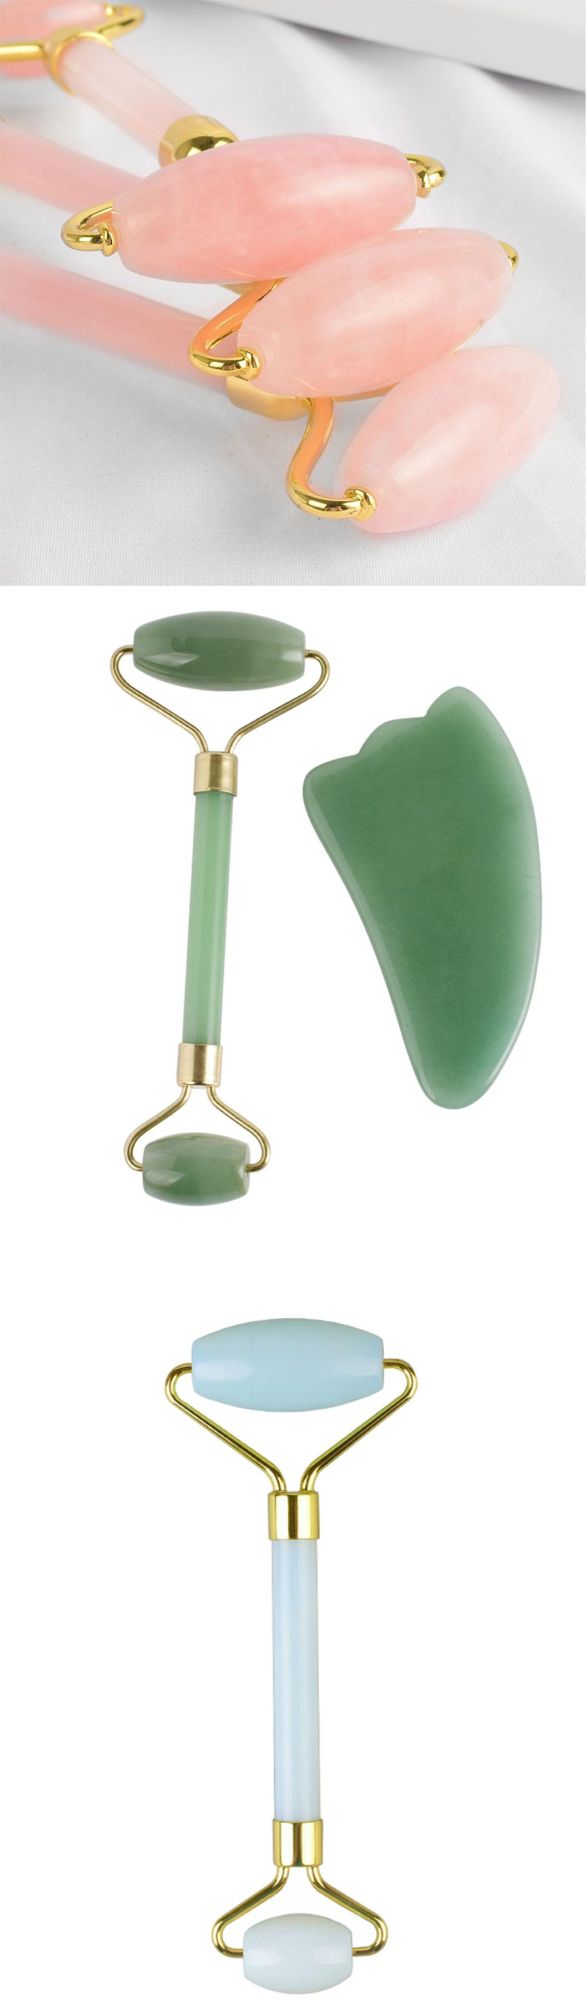 Unisex Double-Headed Green Jade Face-Lifting Meridian Massage Roller